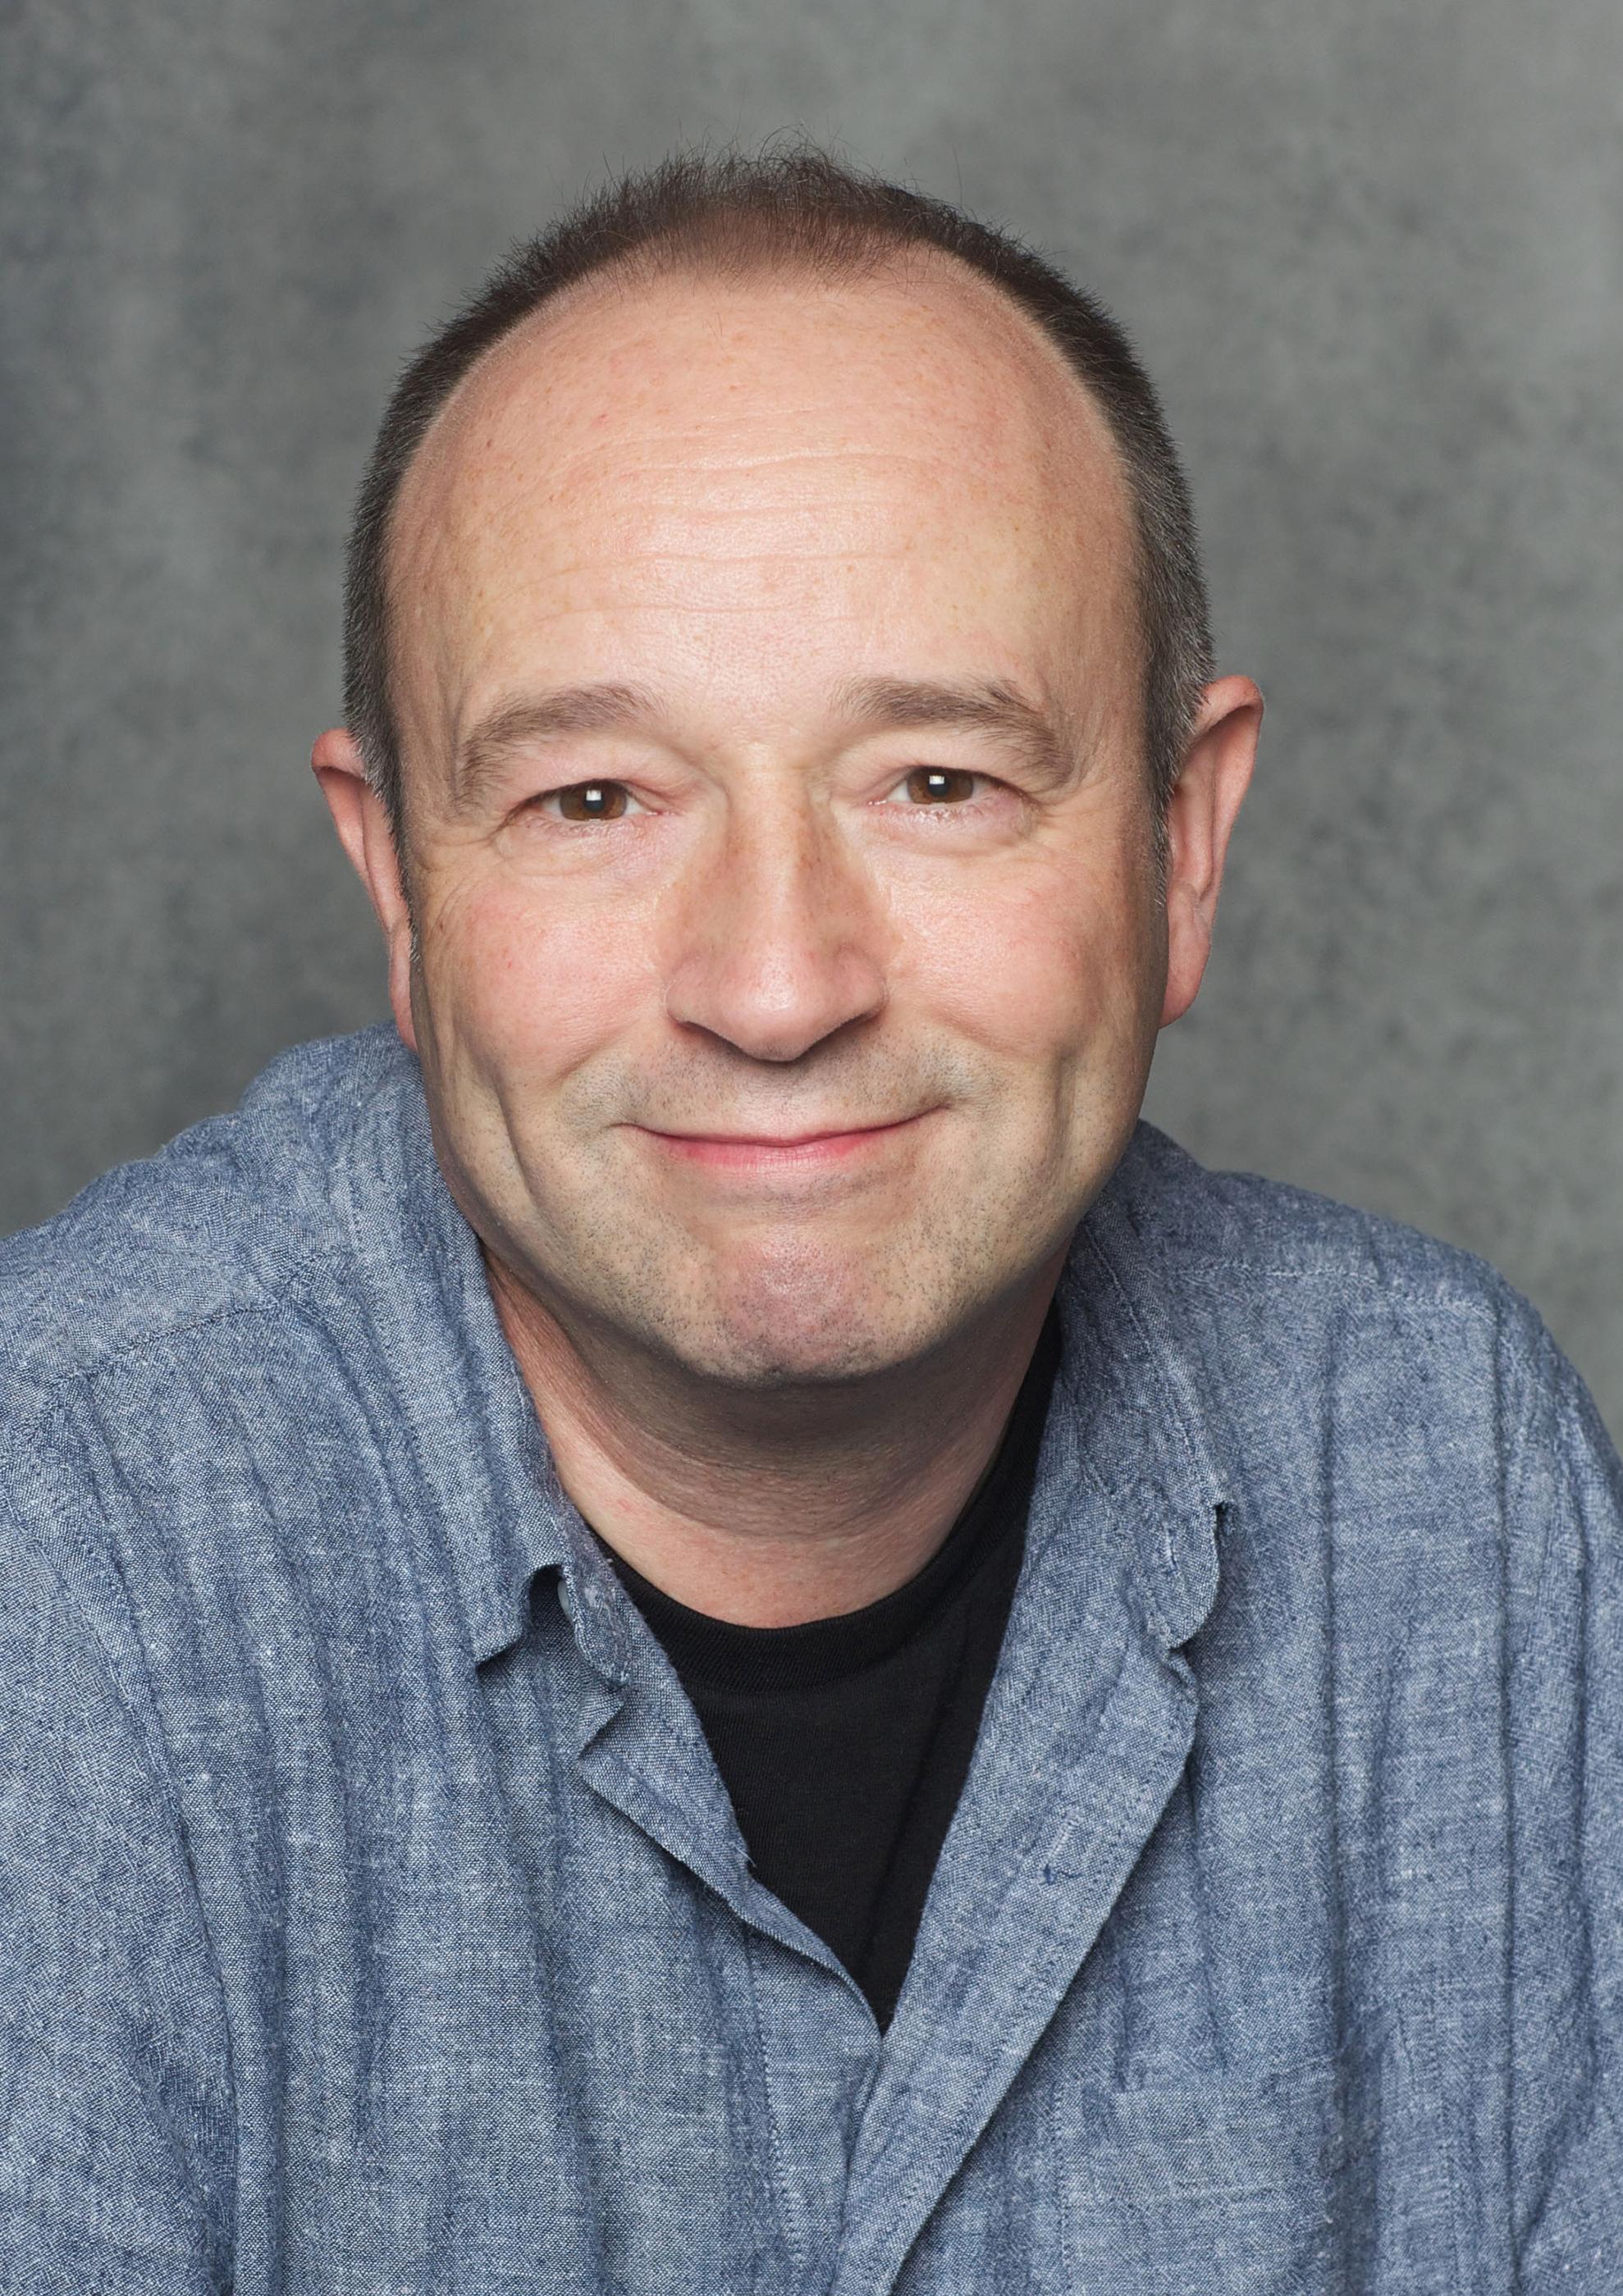 Author and illustrator Alan Nolan